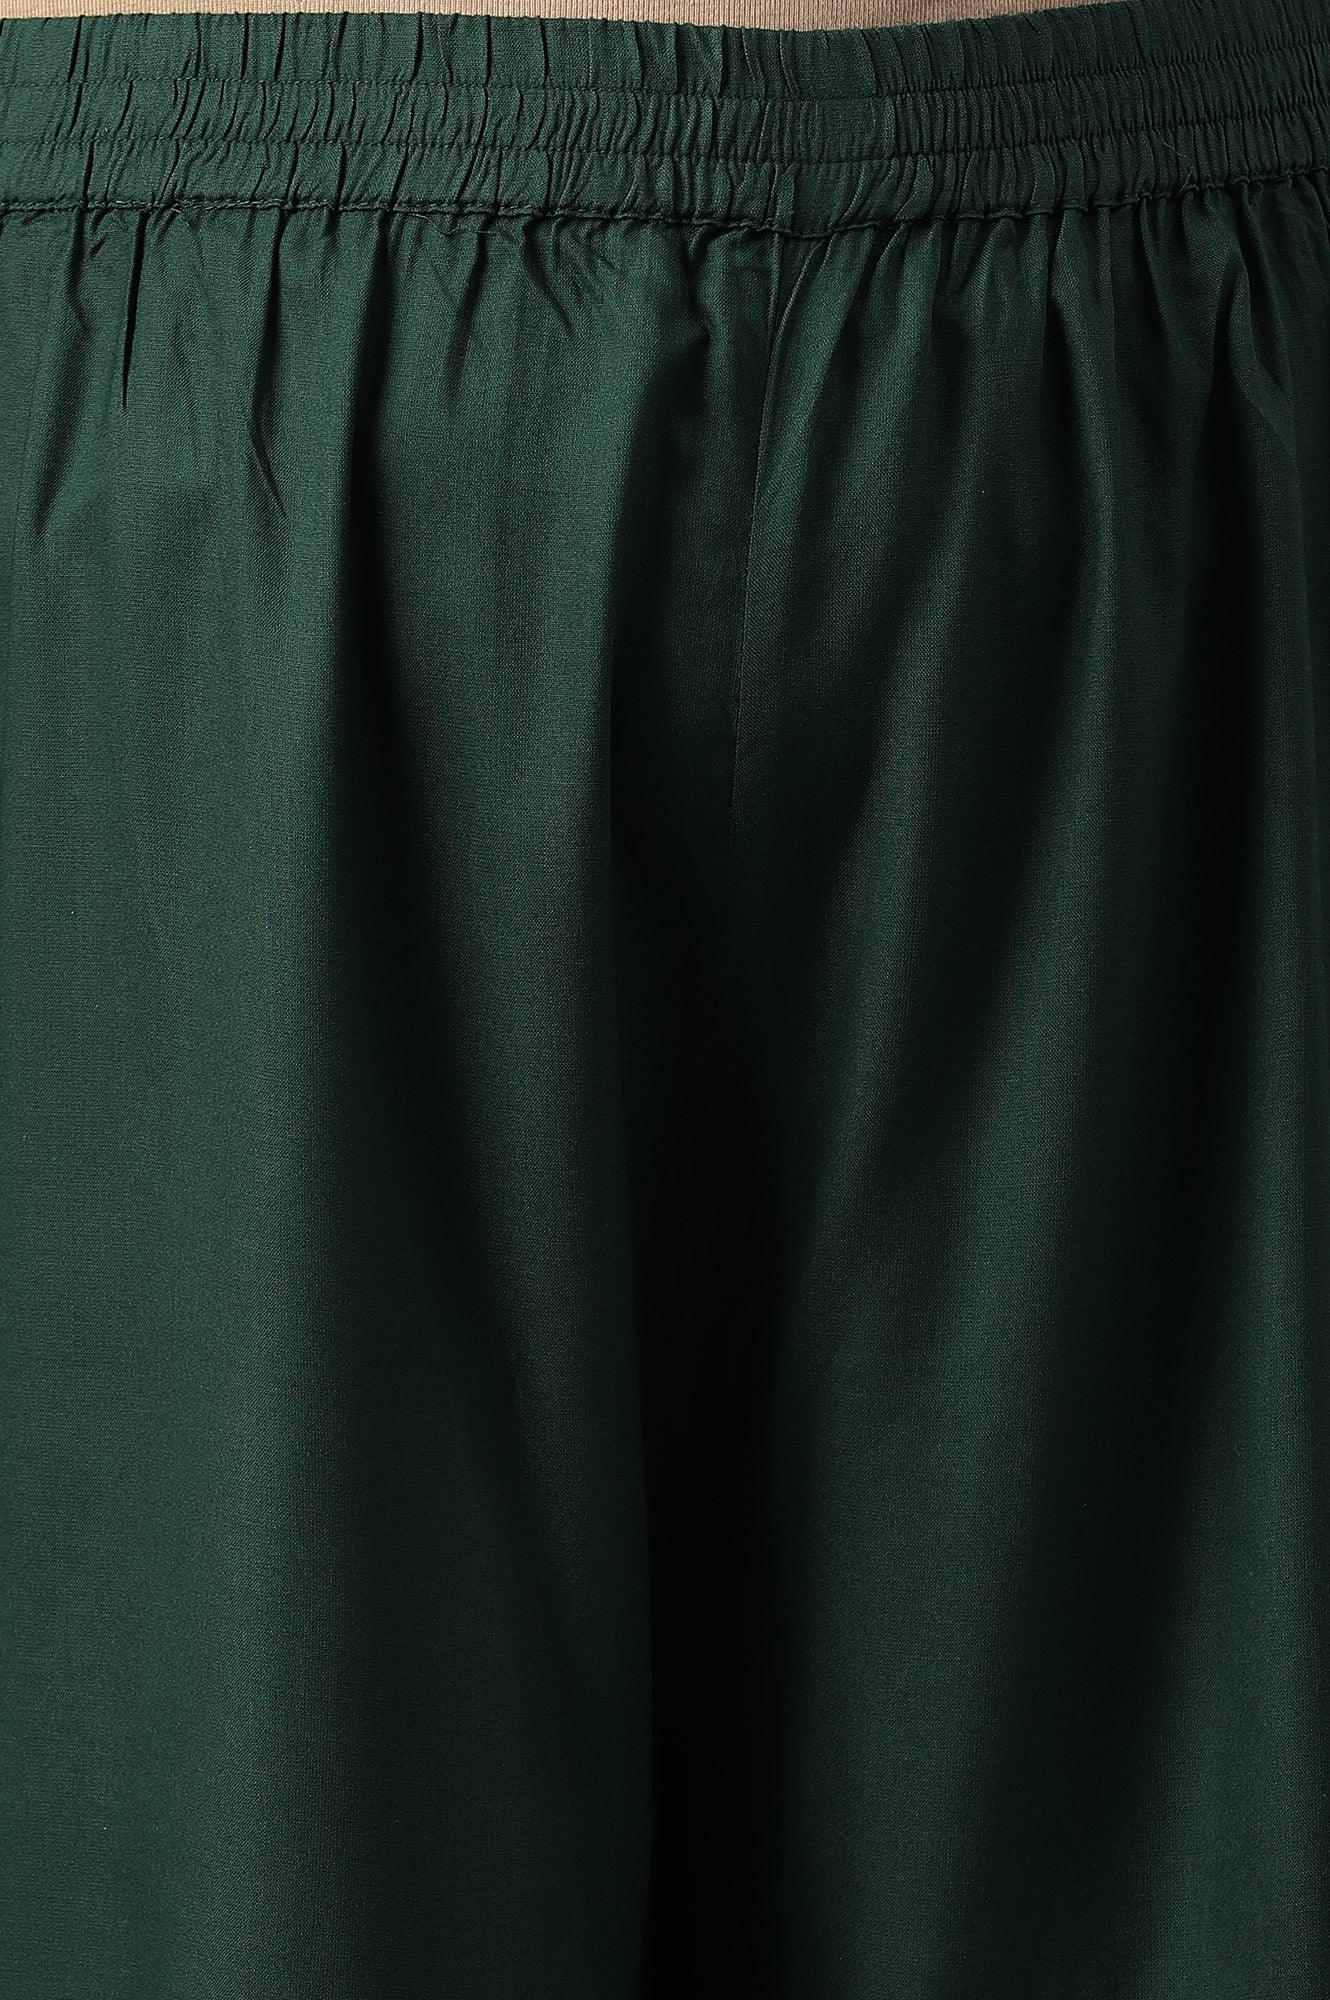 Plus Size Dark Green Glitter Floral Printed kurta With Sharara Pants And Pink Dupatta - wforwoman